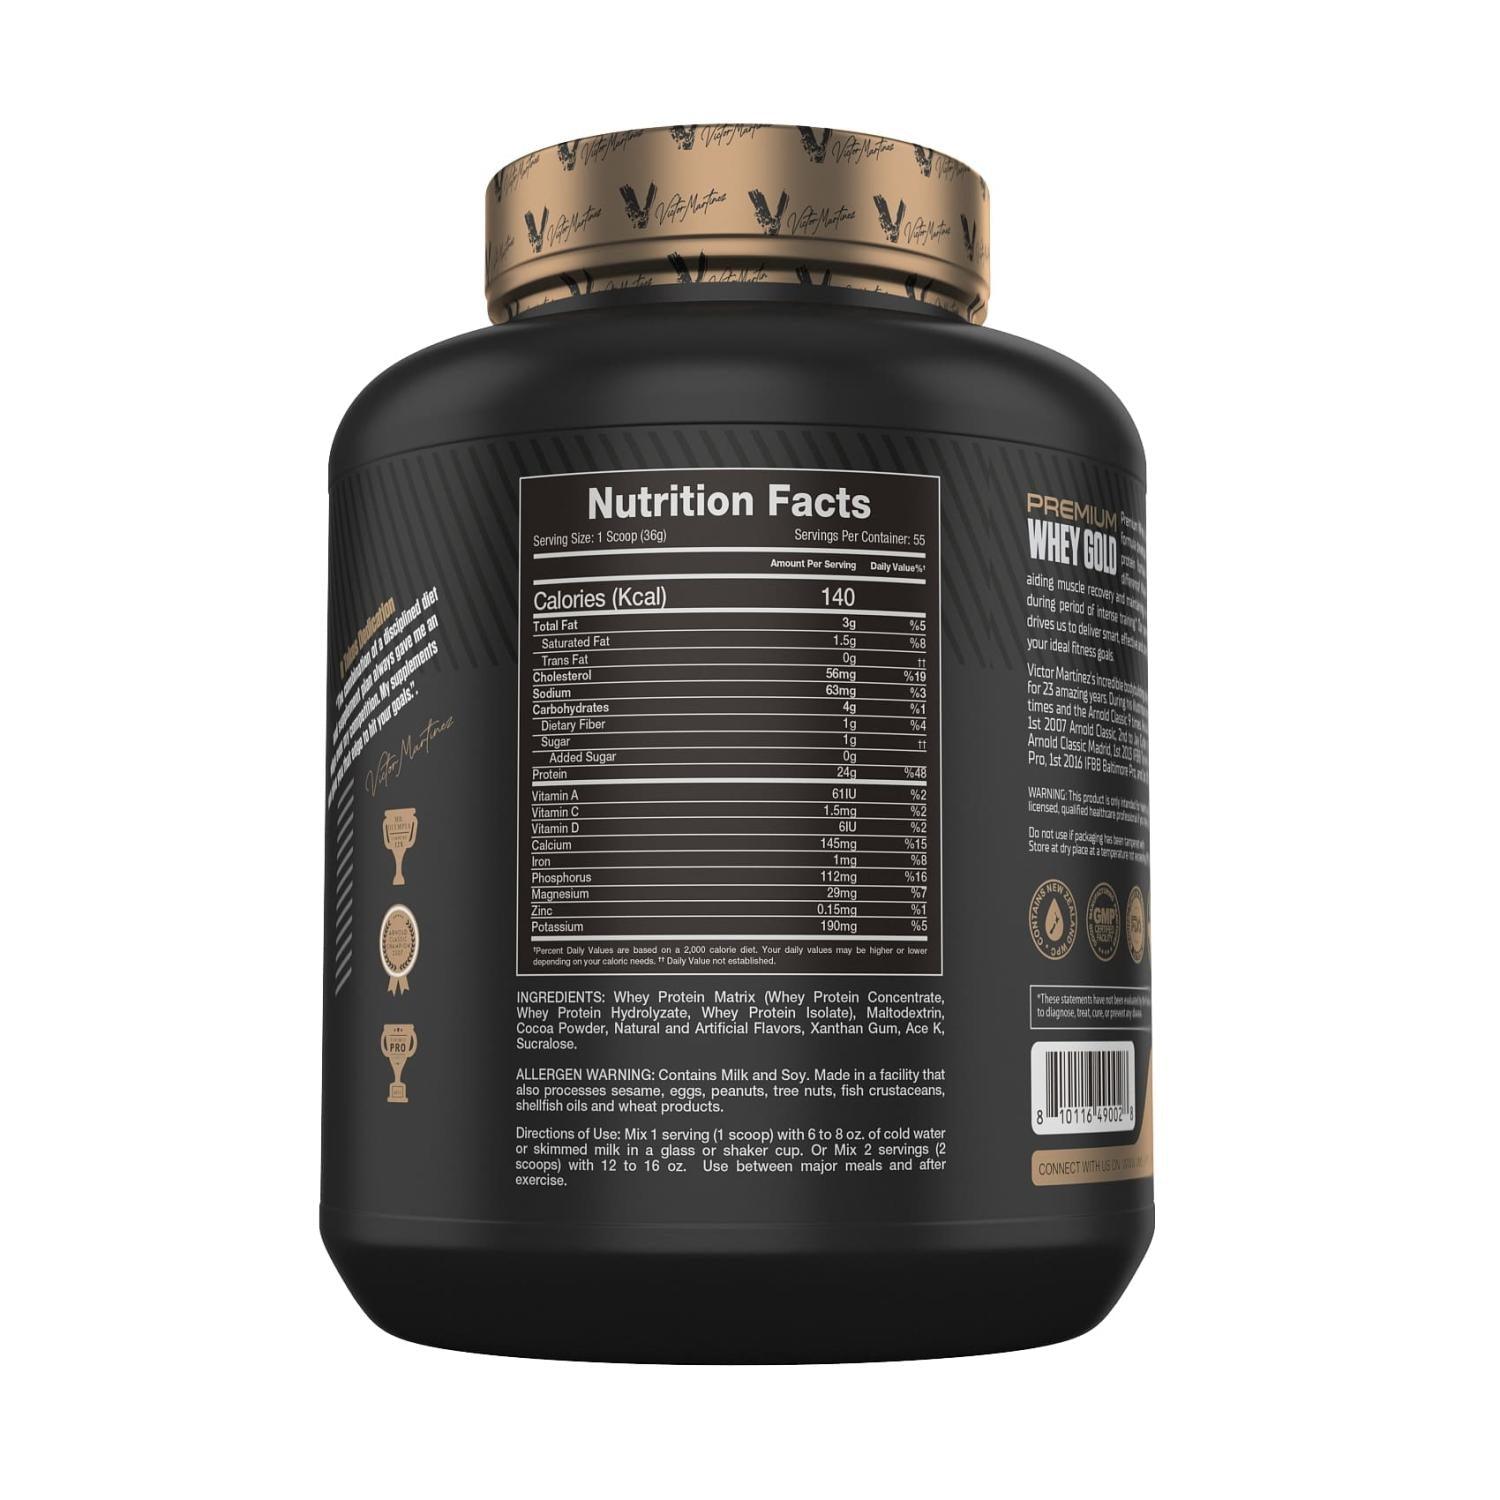 Victor Martinez Premium Whey Gold Protein 4LBS - Wellness Shoppee